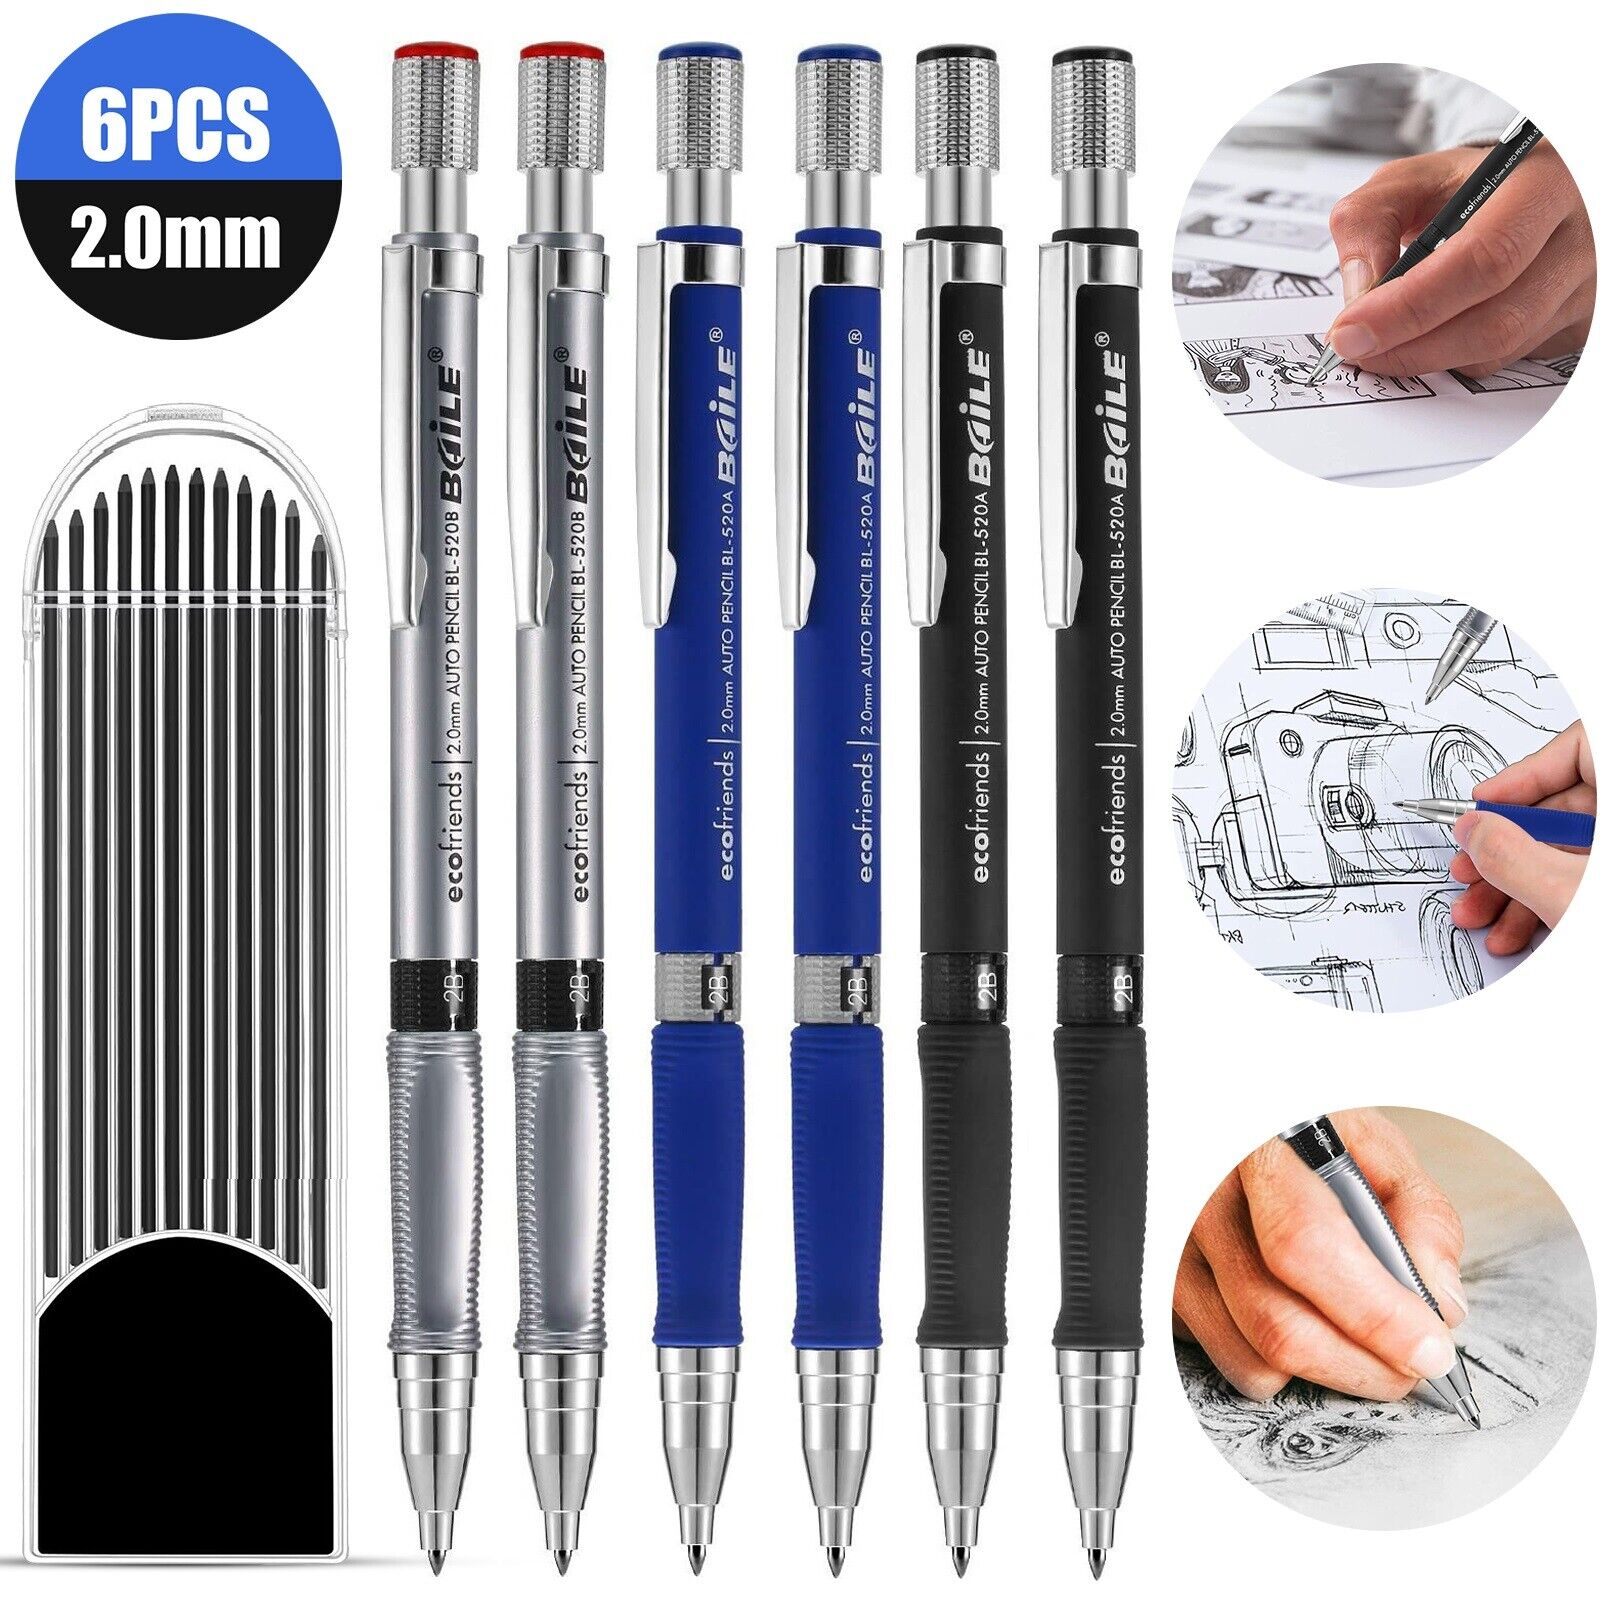 6PCS Mechanical Clutch Pencils 2.0mm Drafting Sketching Drawing +12 Refills Lead